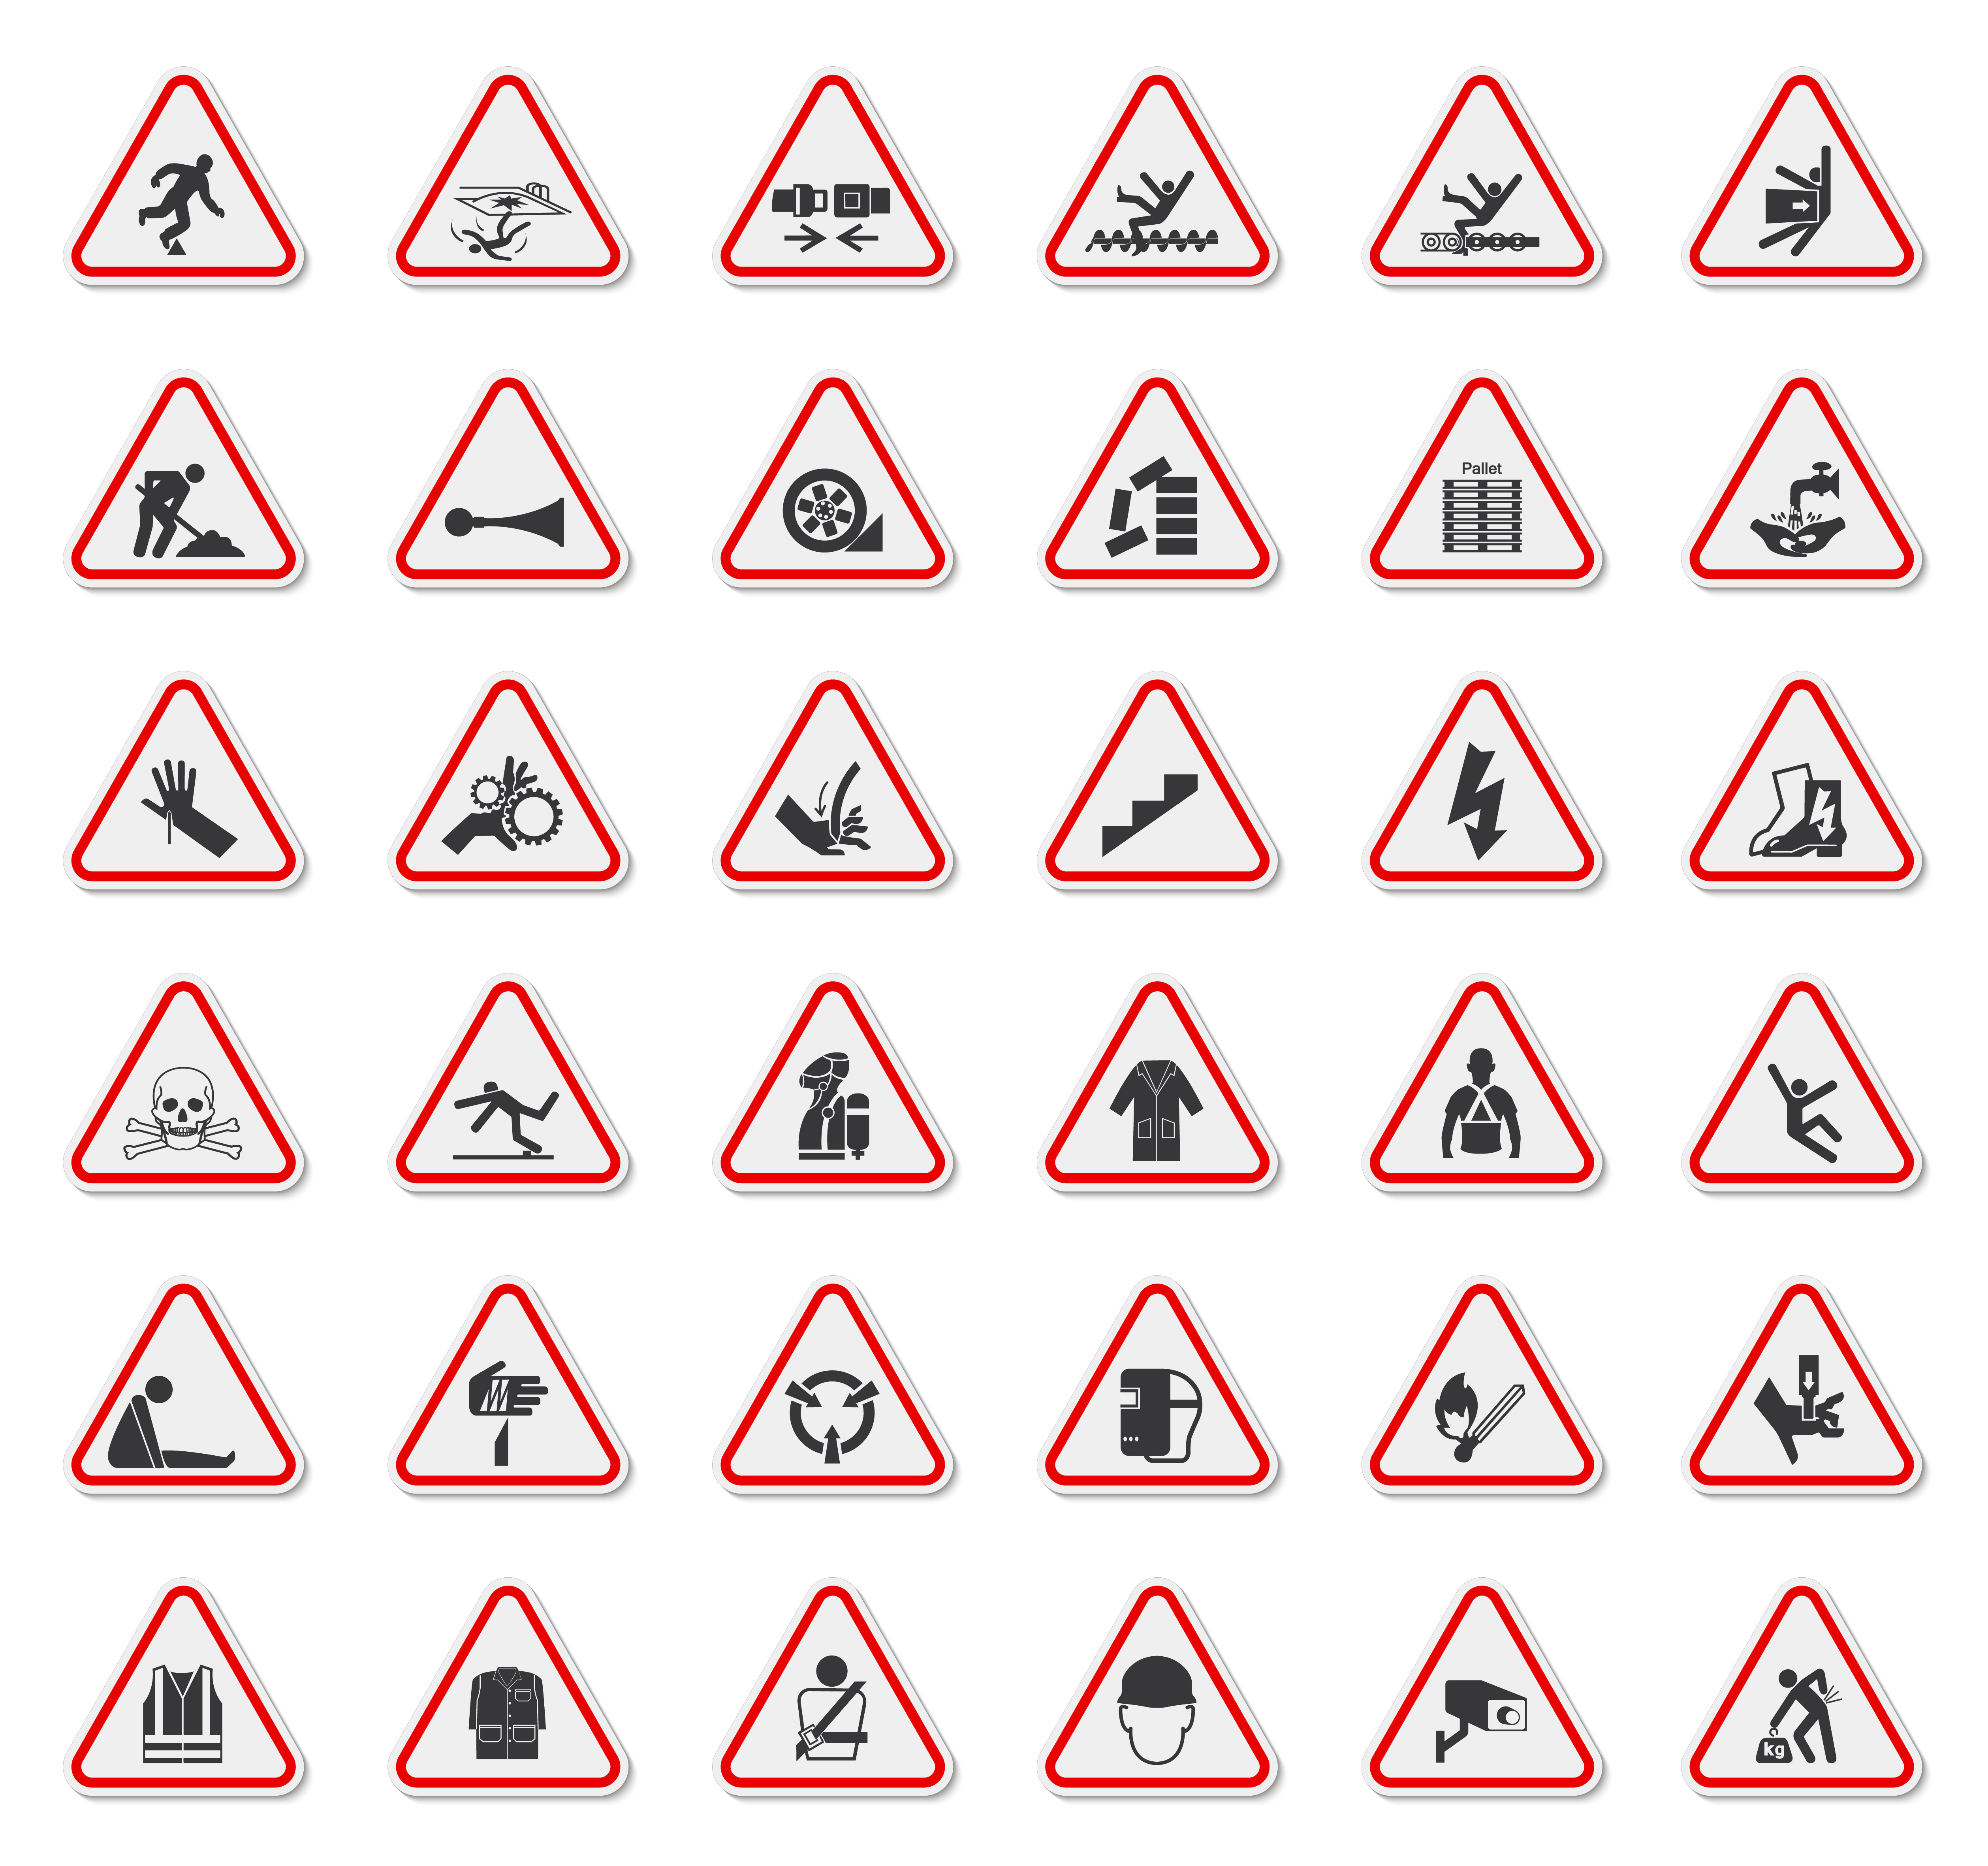 Warning Hazard Symbols - Download Free Vectors, Clipart ...